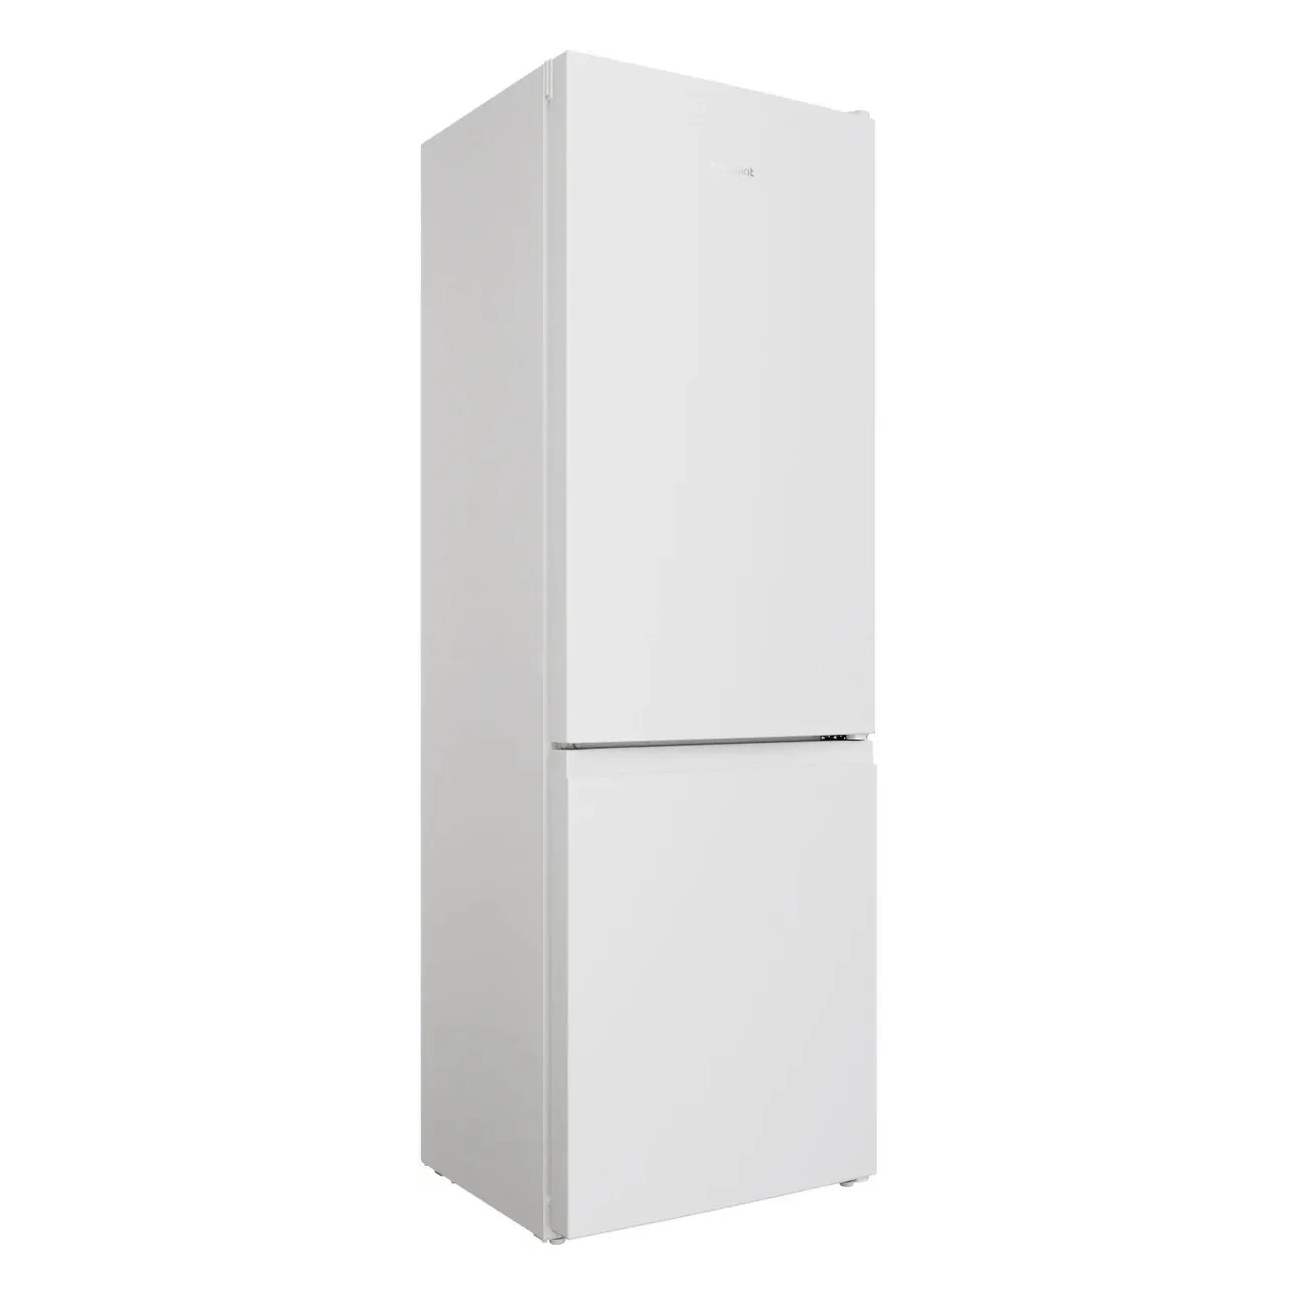 Холодильник HotPoint HT 4180 W белый, серебристый двухкамерный холодильник hotpoint ht 4180 s серебристый